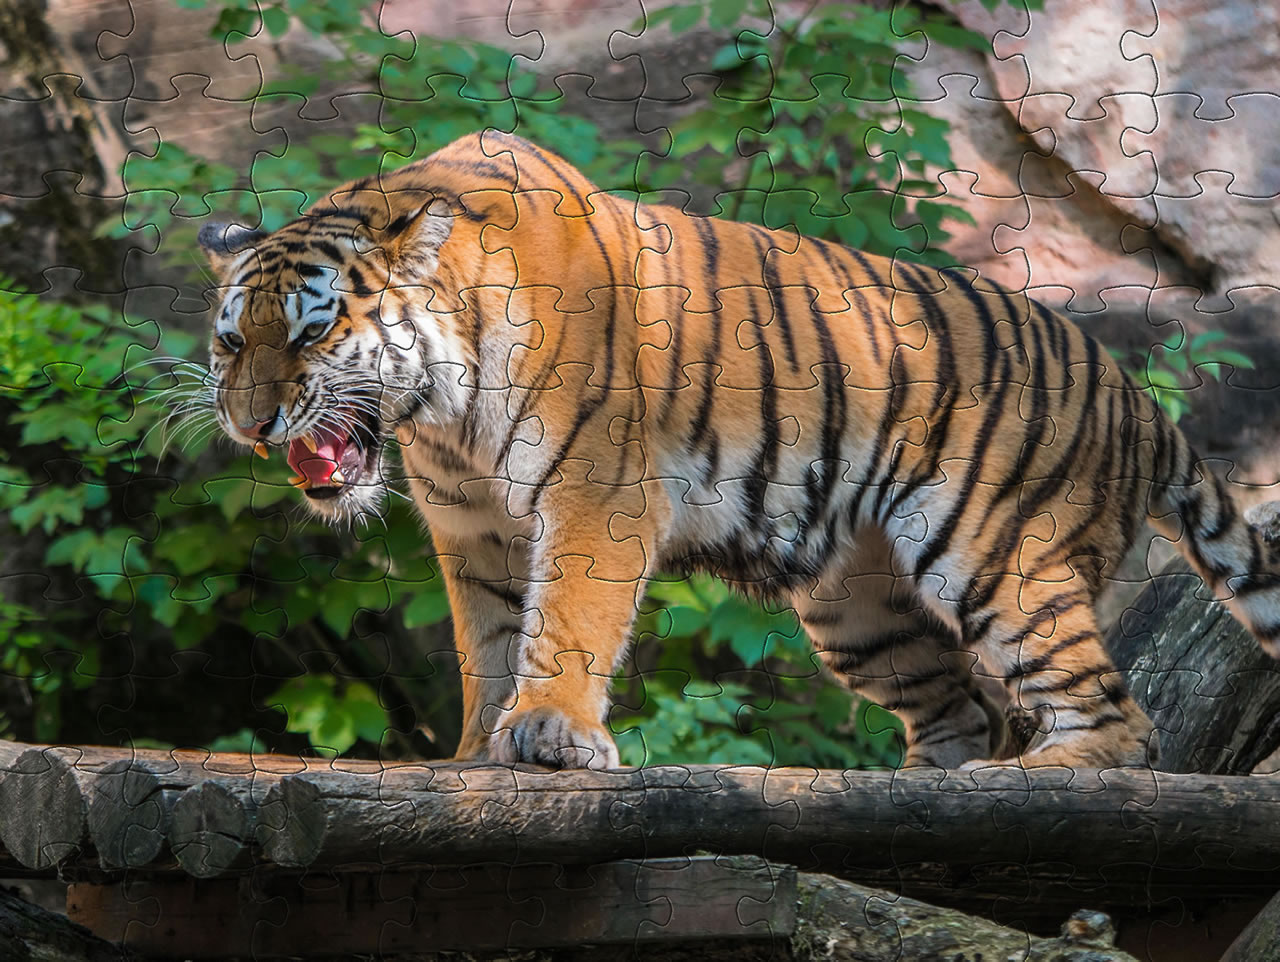 Tigers | Jigsaw puzzles of tigers